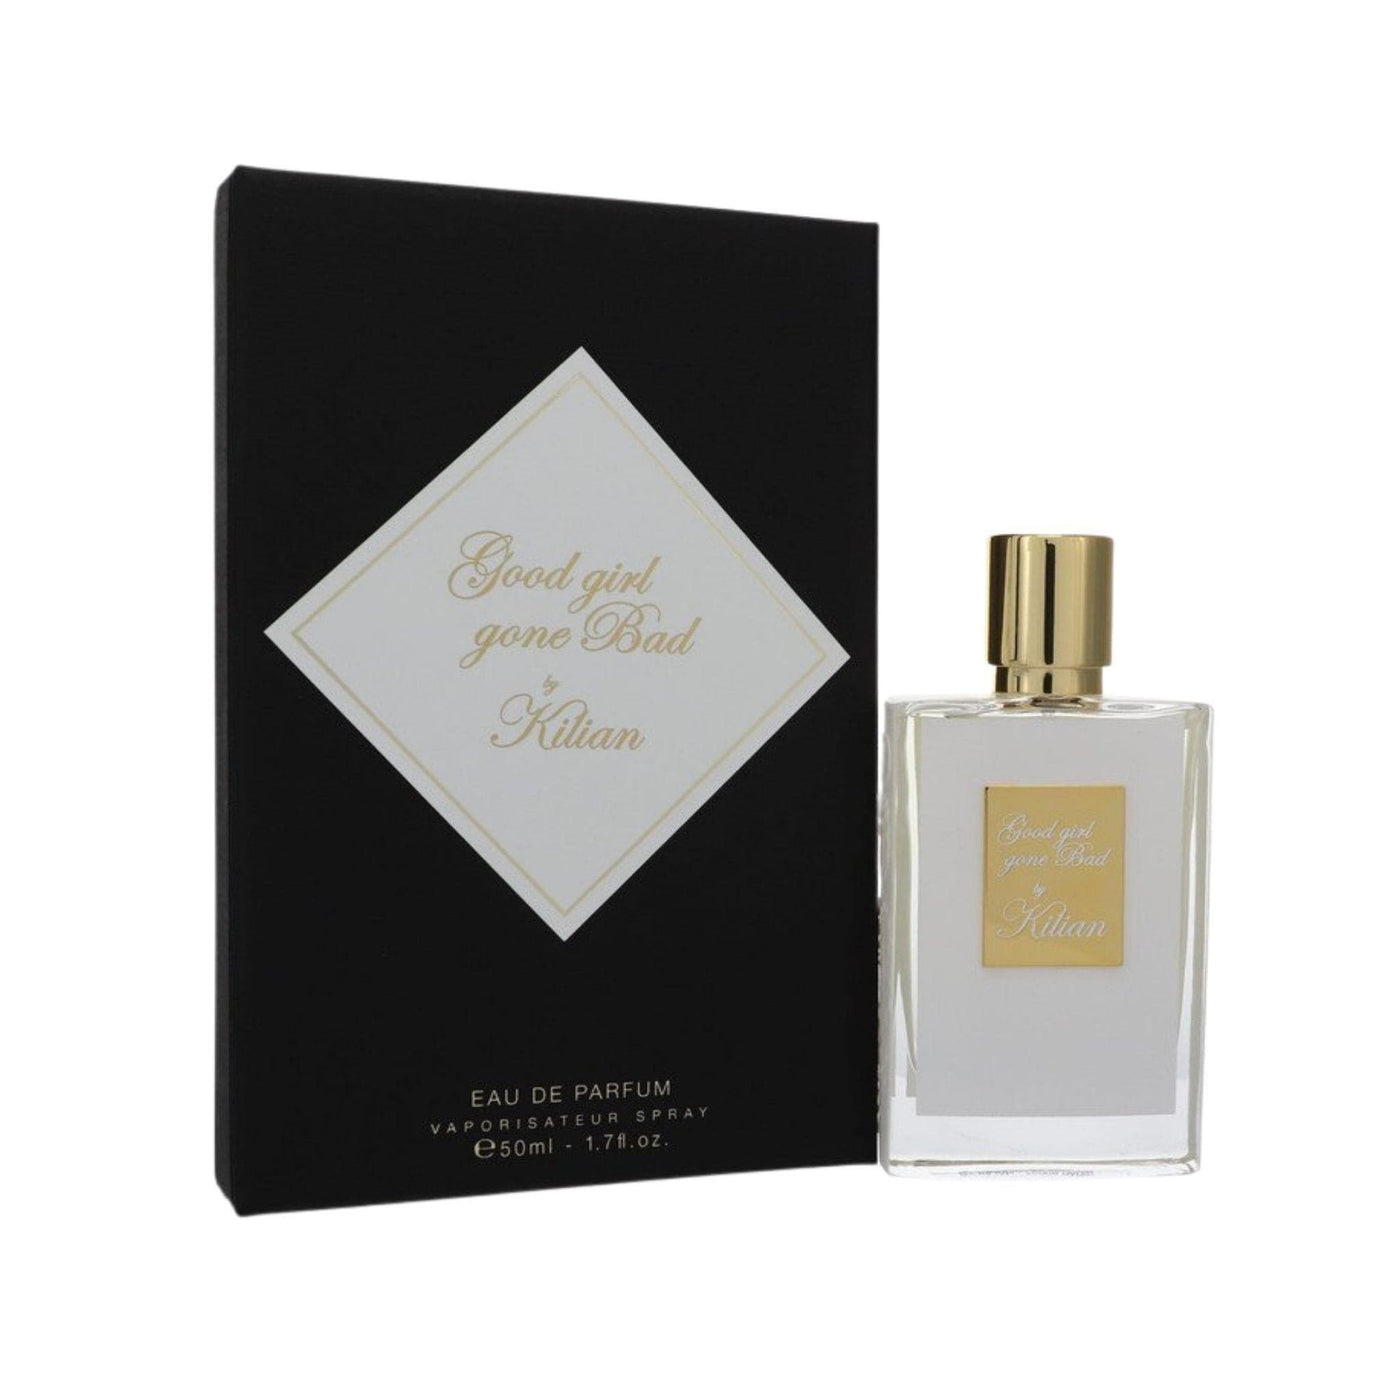 GGGB Kilian original perfume